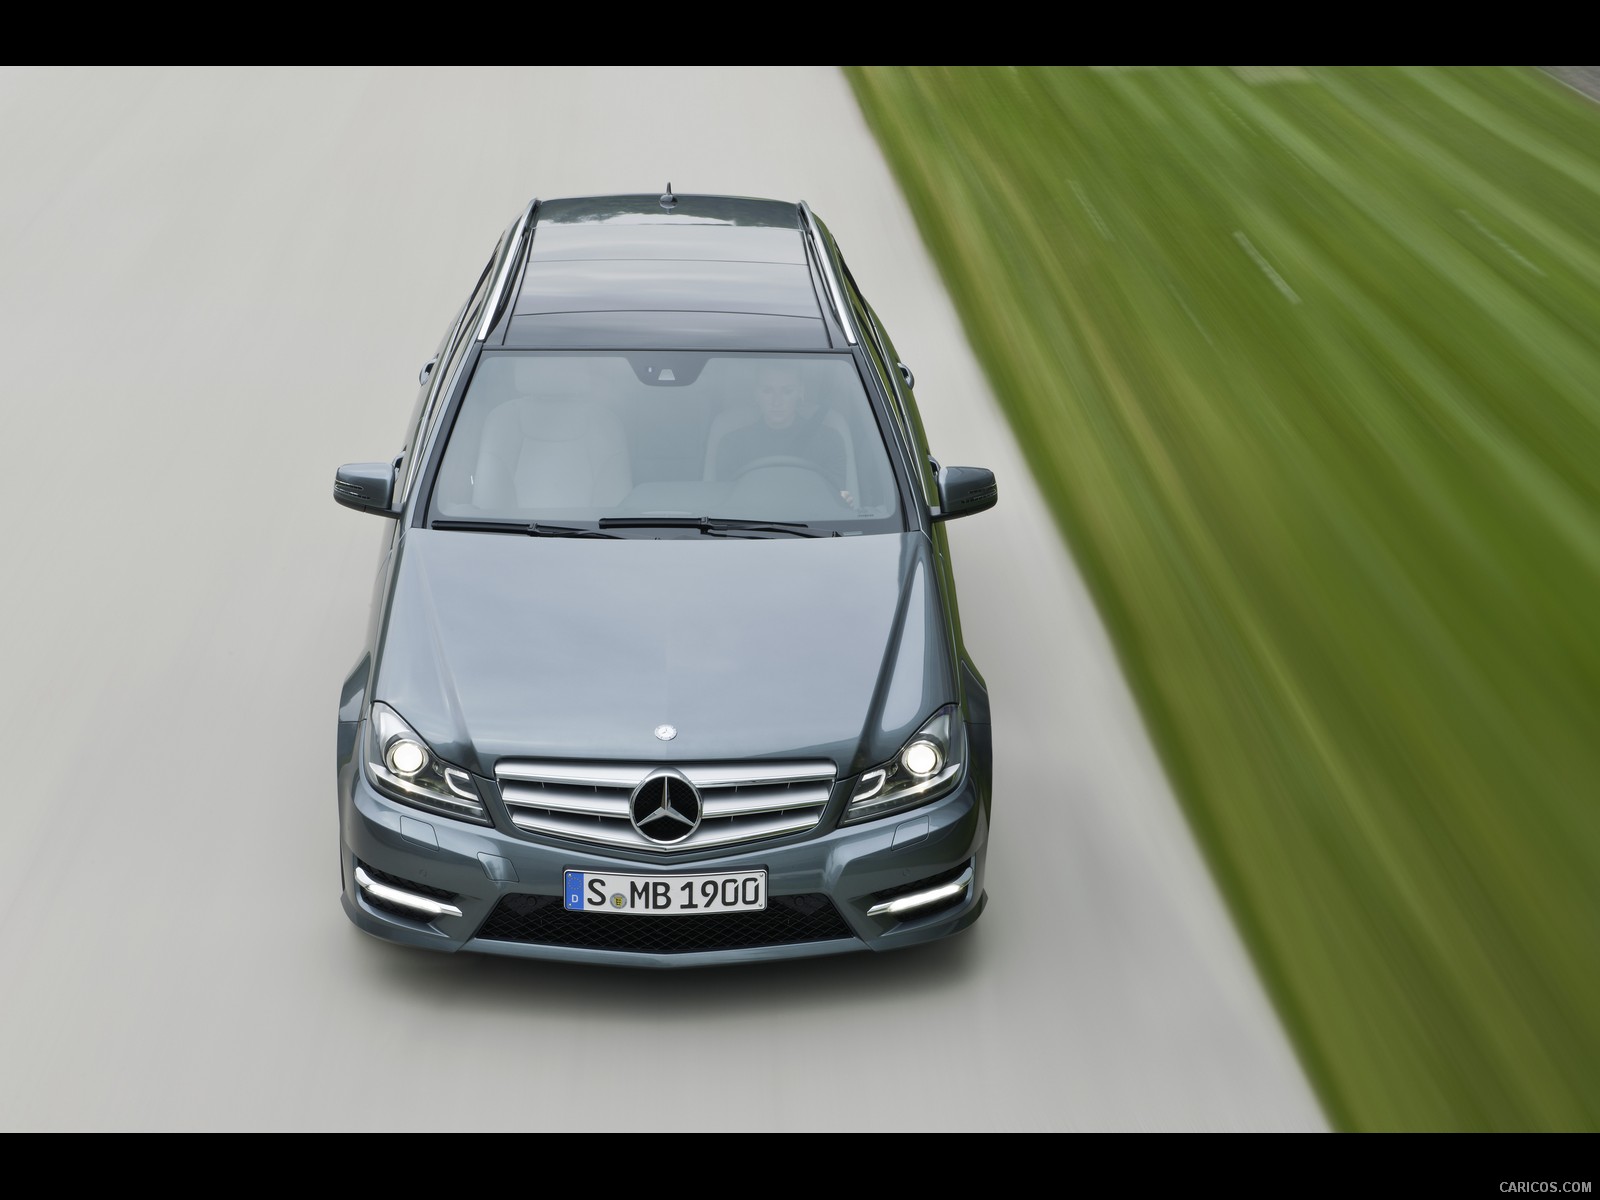 Mercedes-Benz C-Class Estate (2012)  - Top, #23 of 36